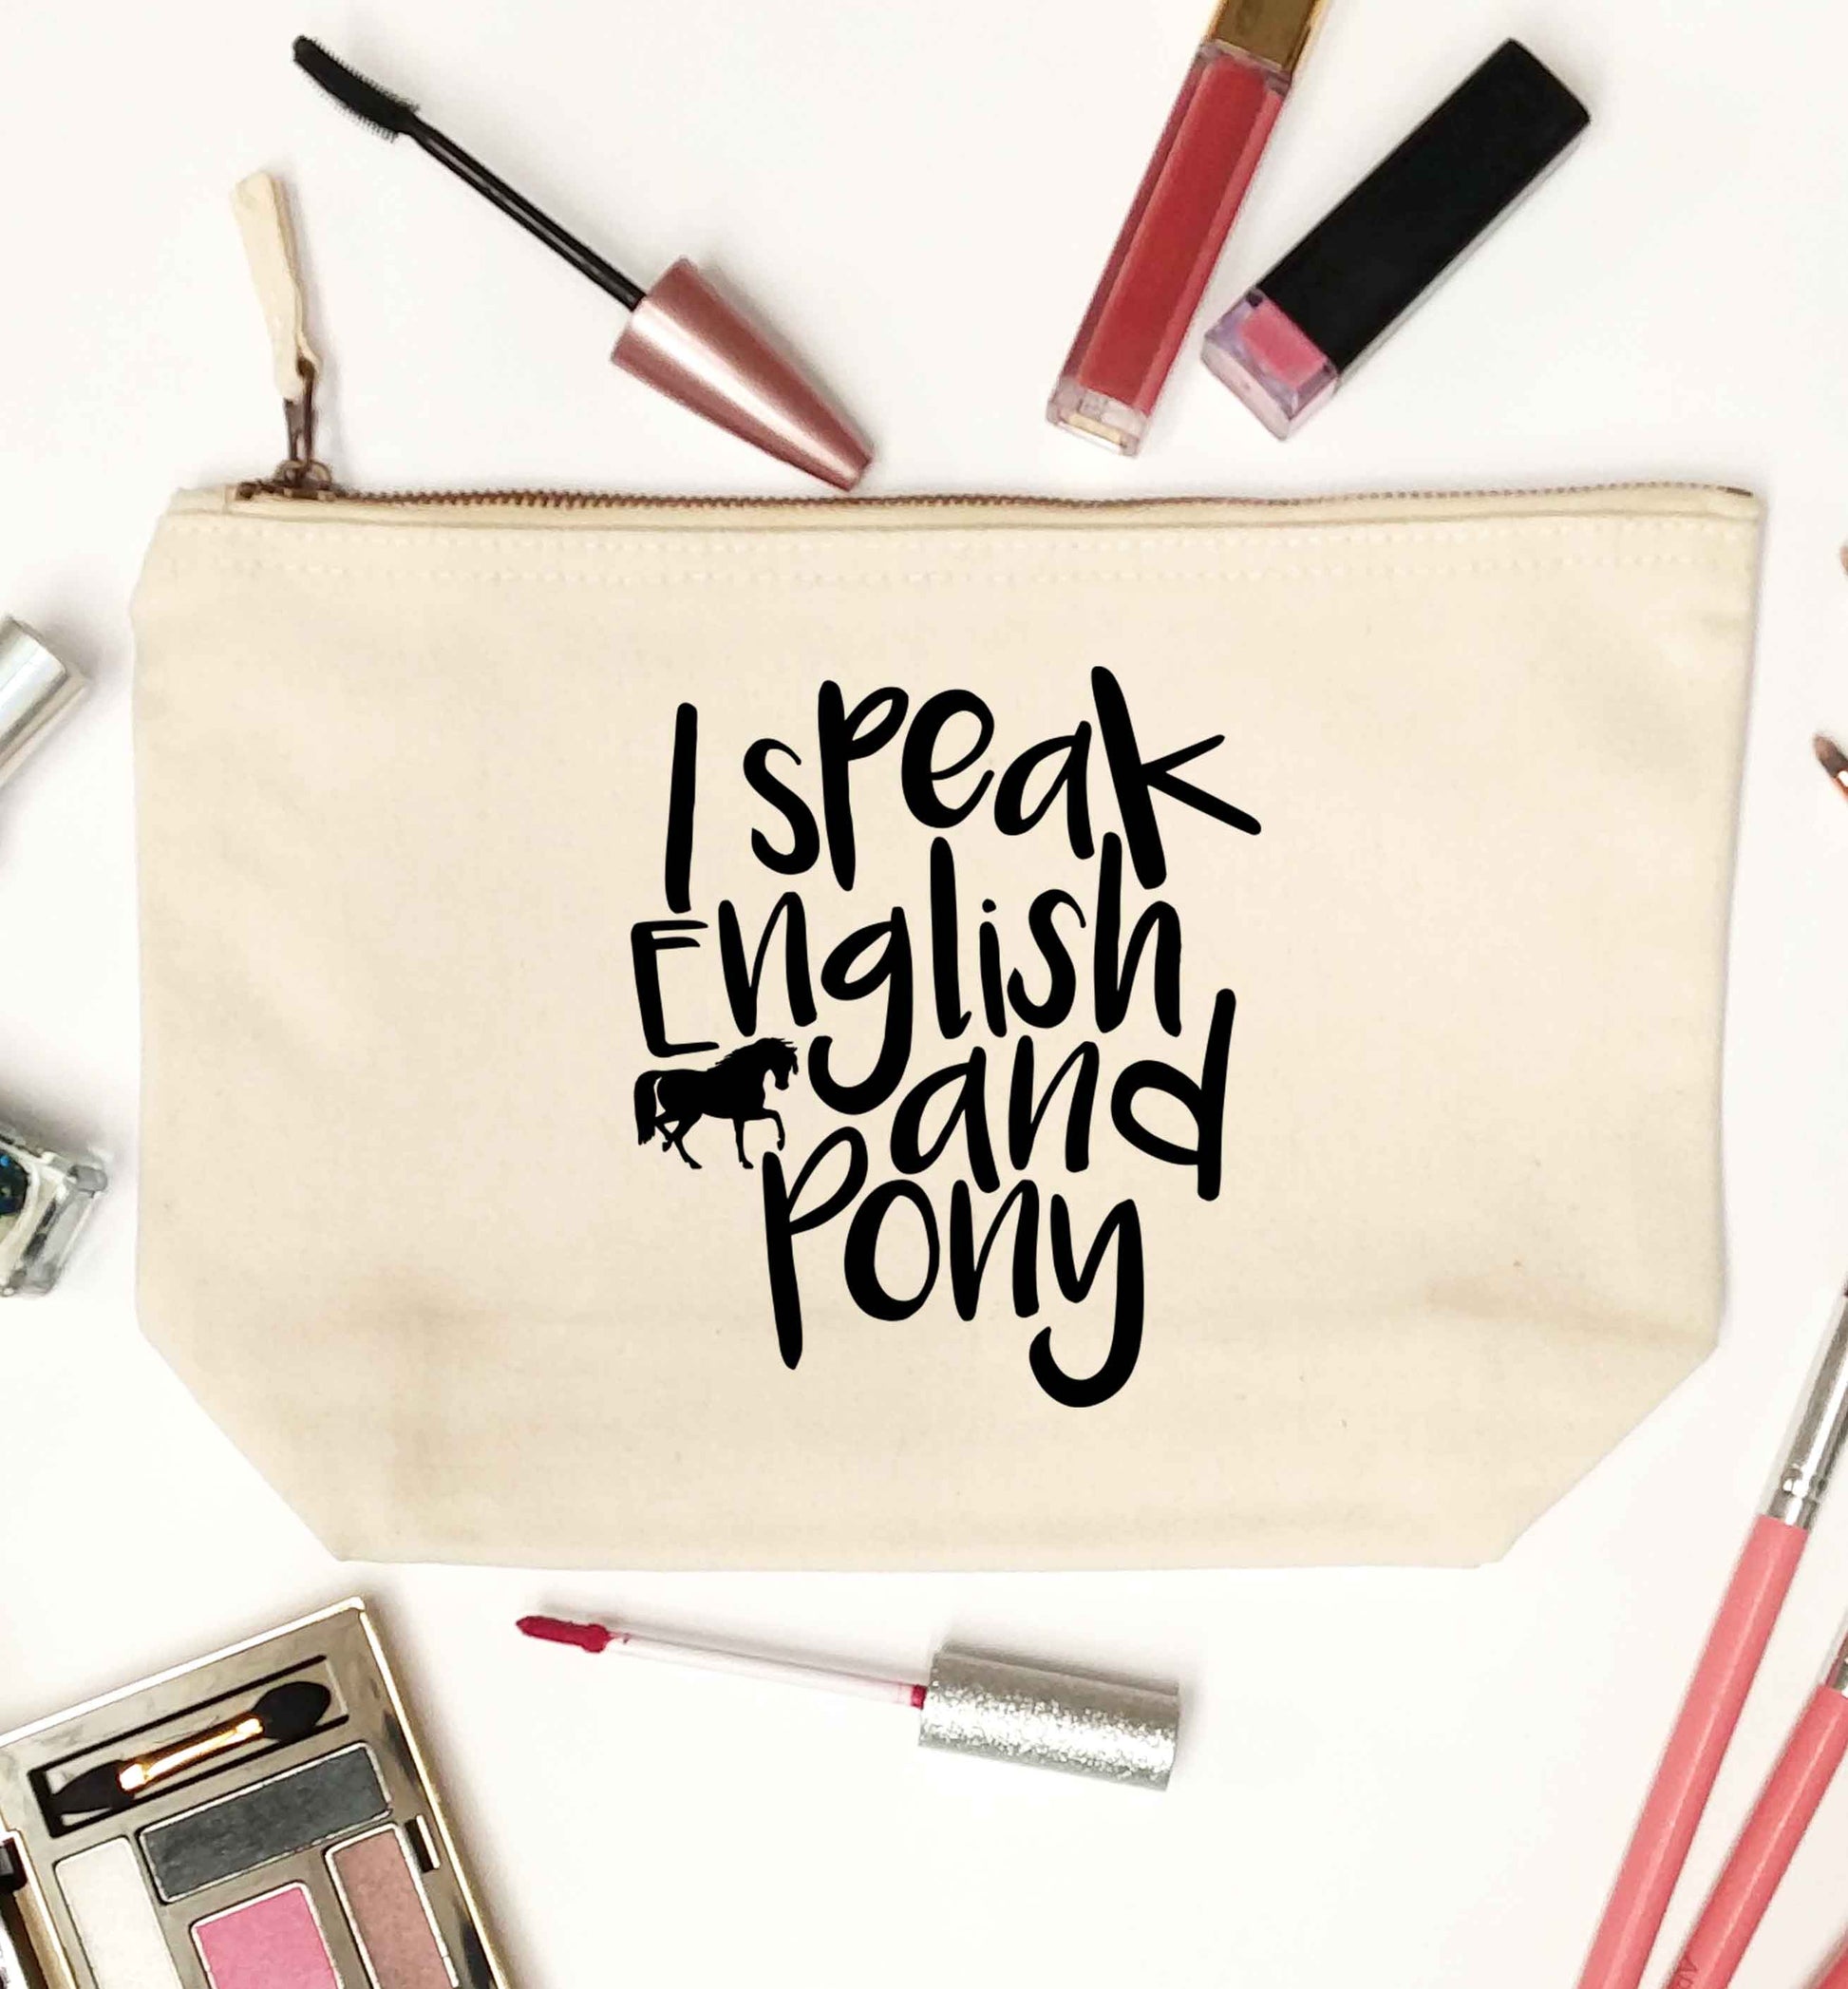 I speak English and pony natural makeup bag